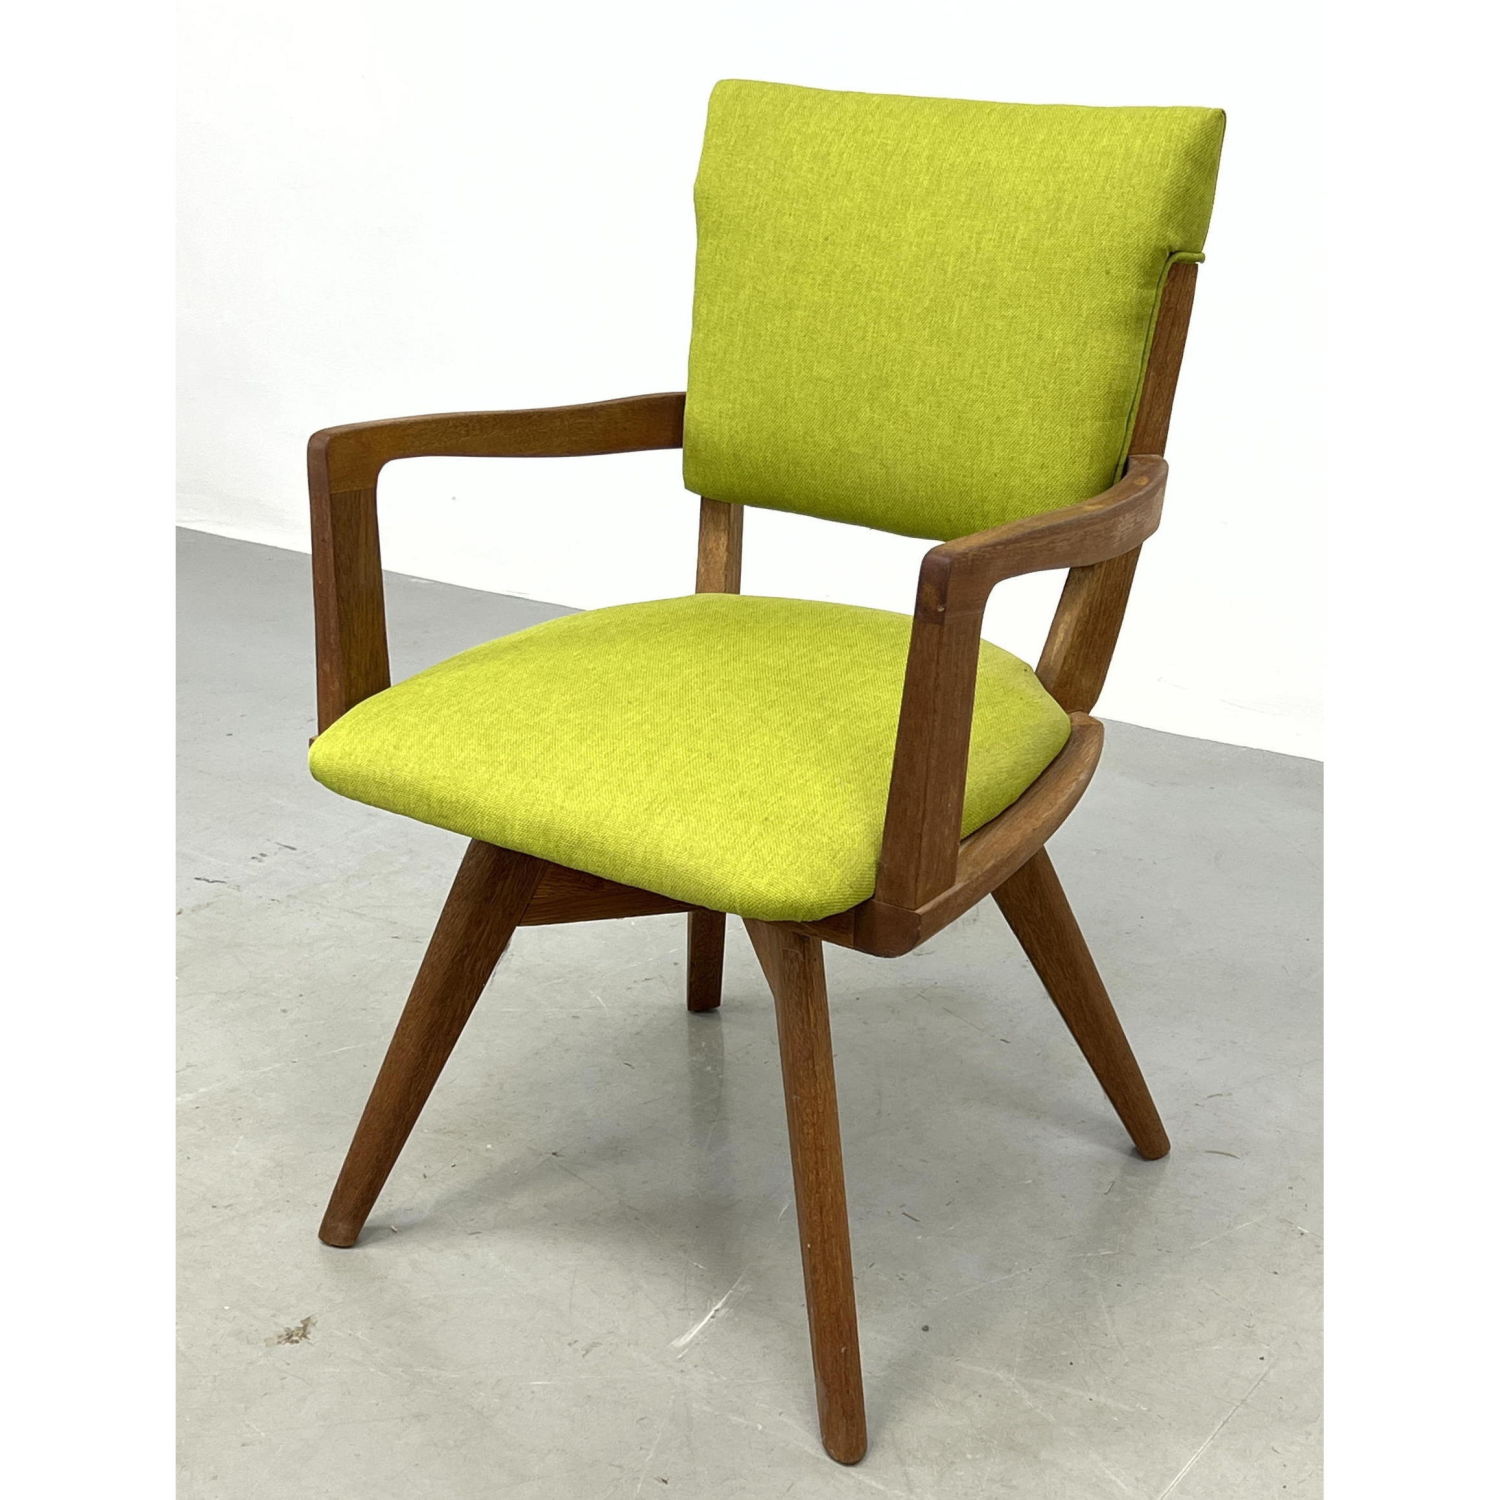 Modernist Swivel Open Arm Chair.